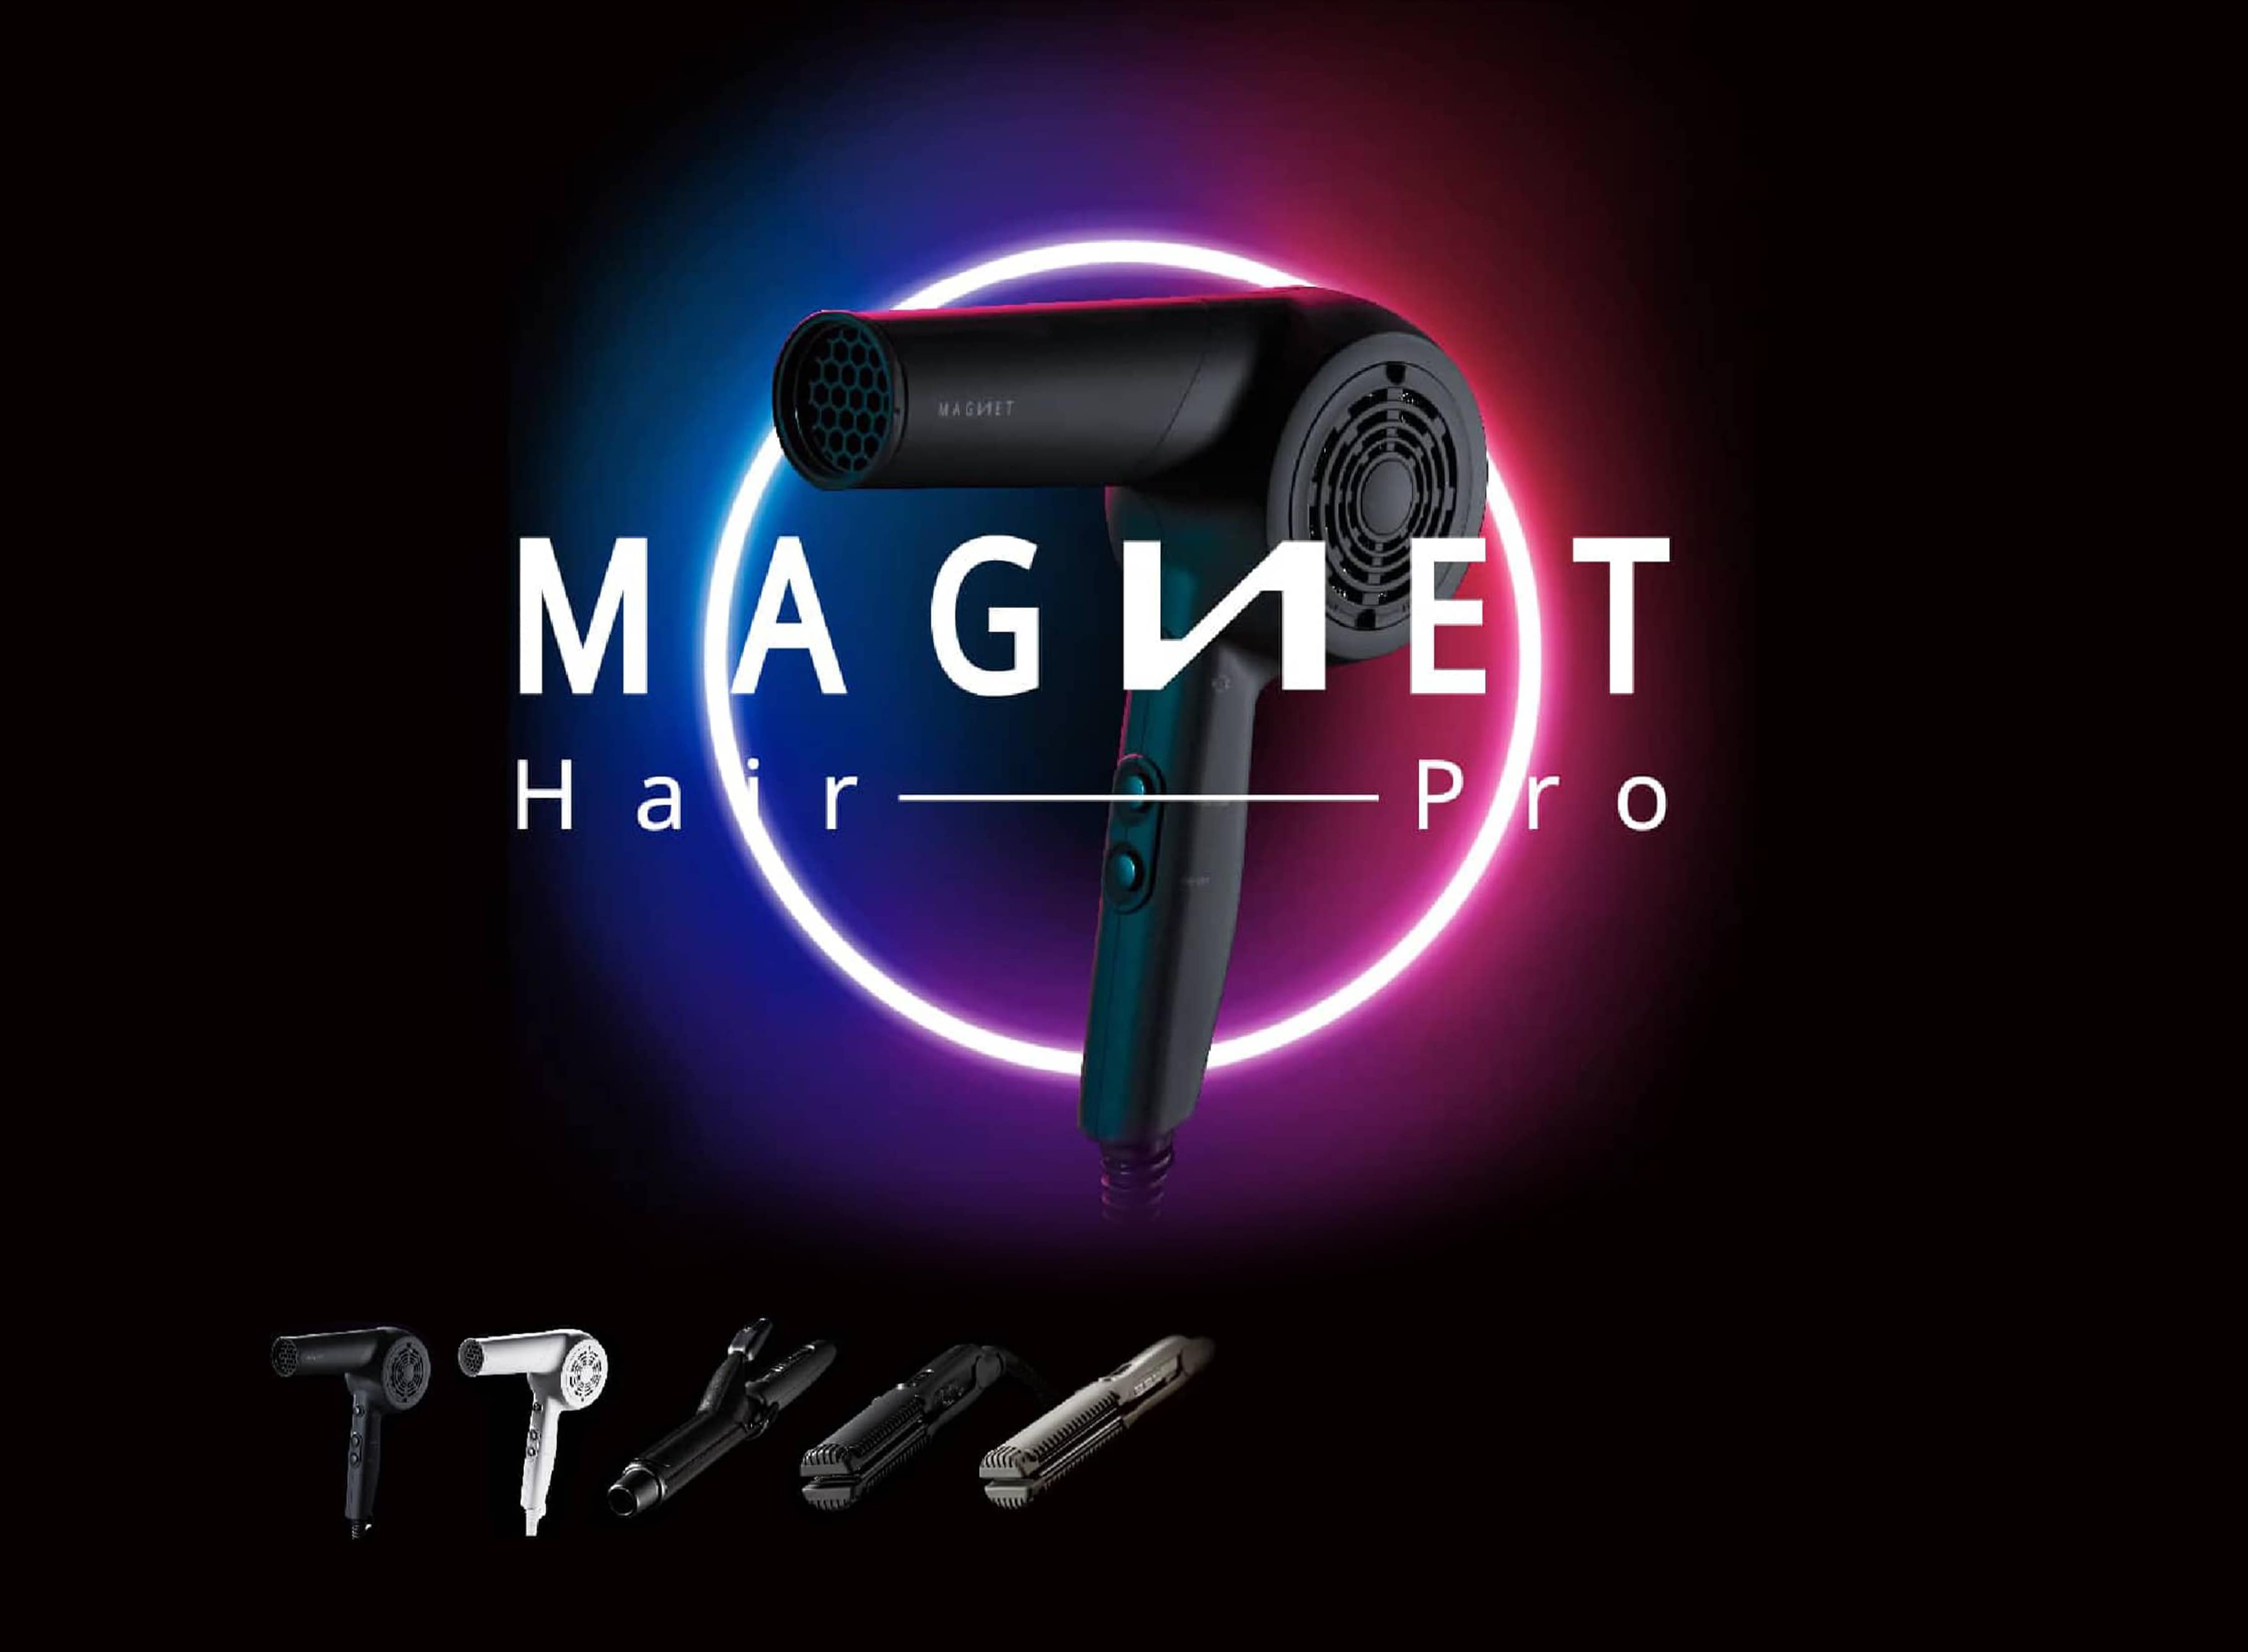 MAGNET Hair Pro